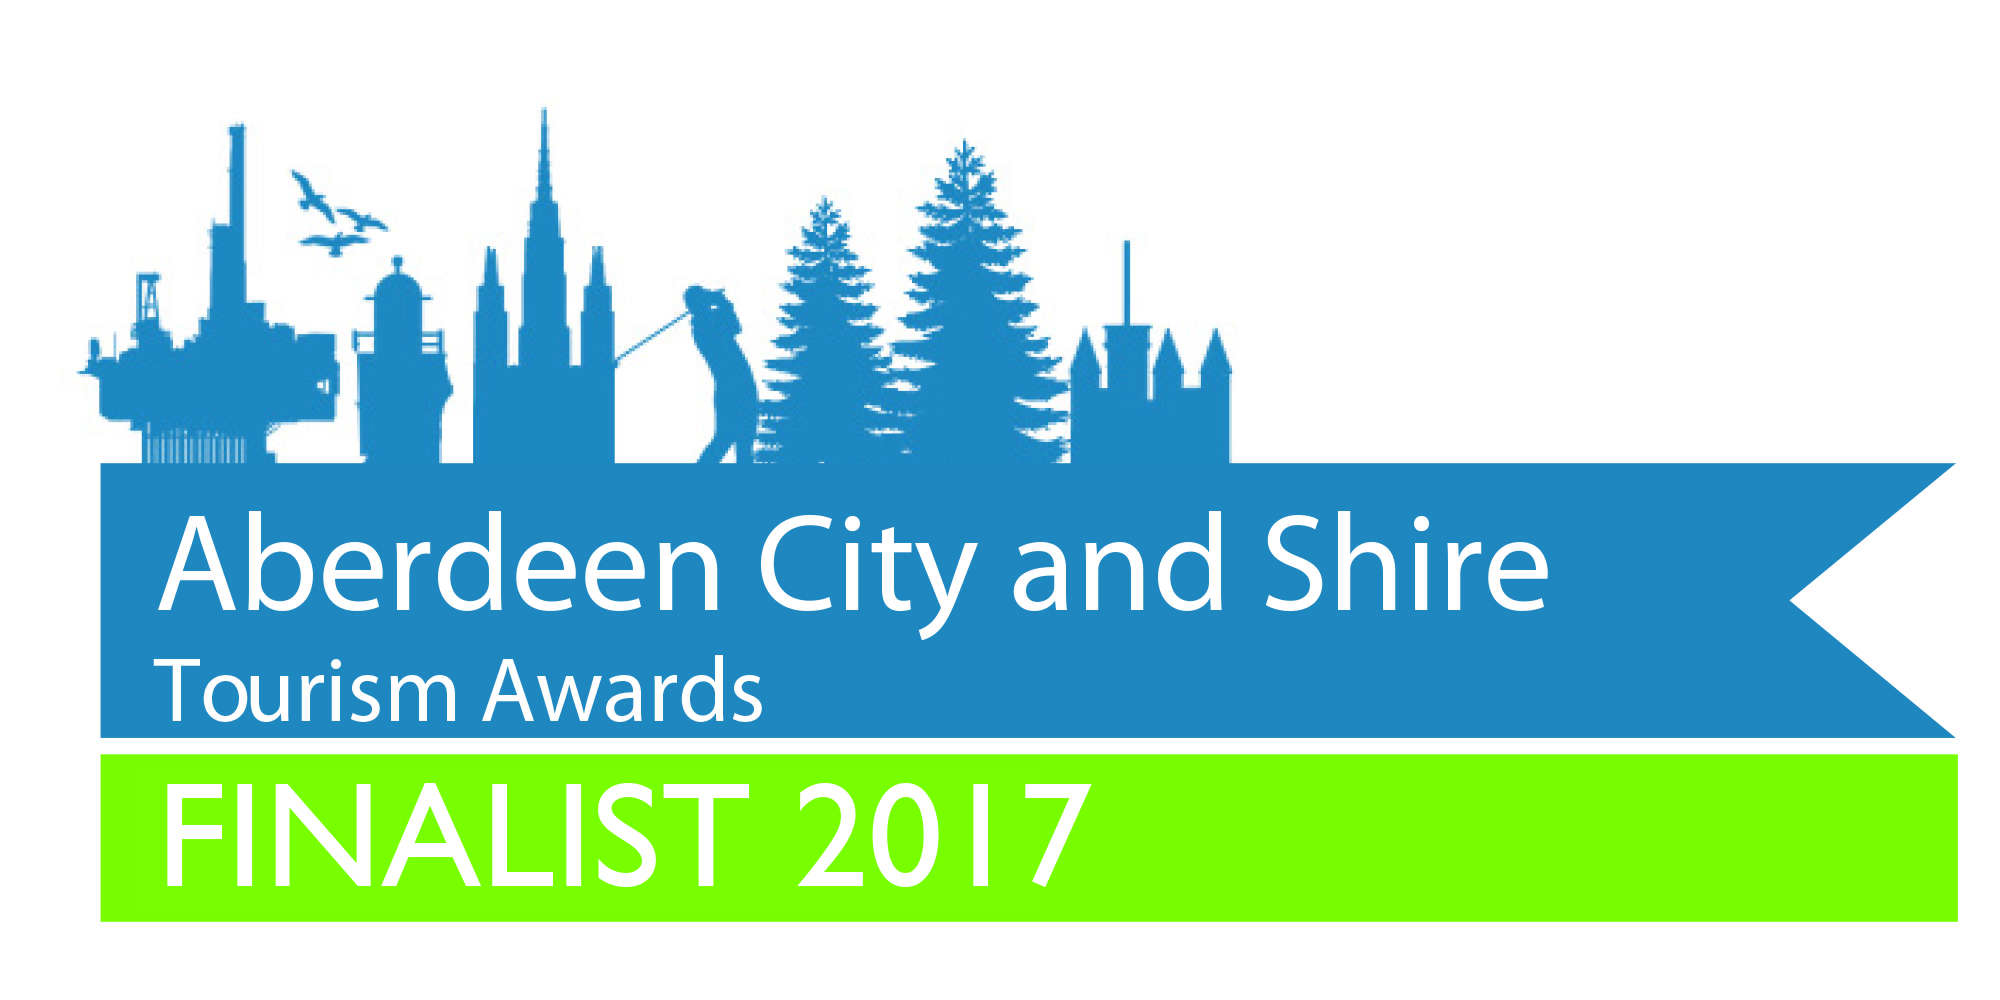 Aberdeen City and Shire Tourism Award 2017 Finalist